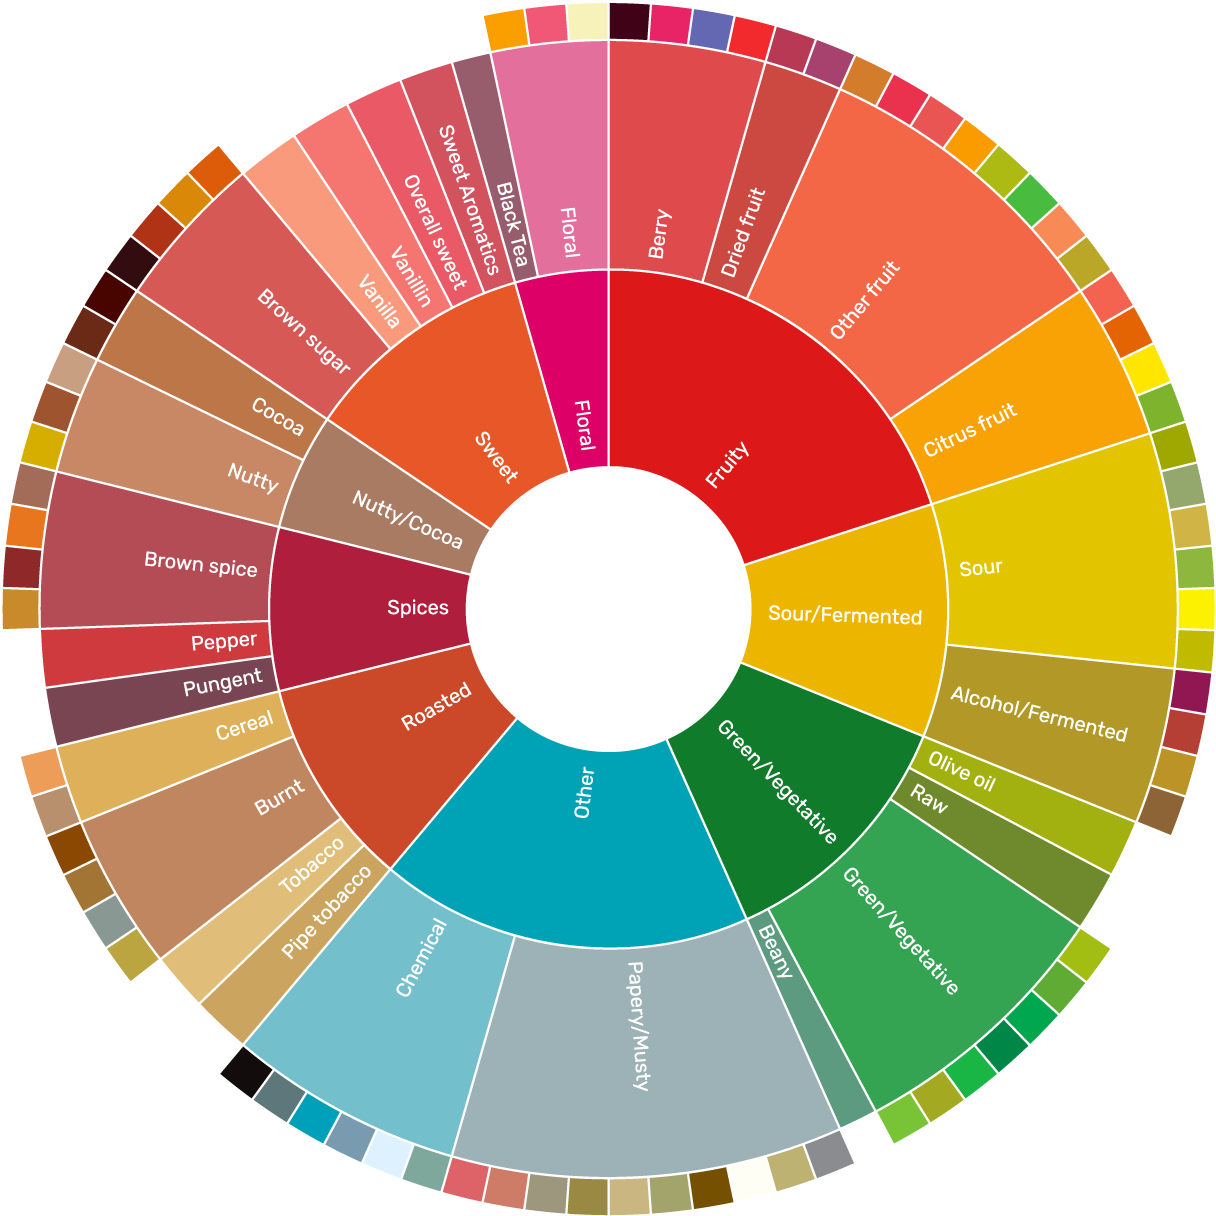 The coffee tasting flavor wheel.